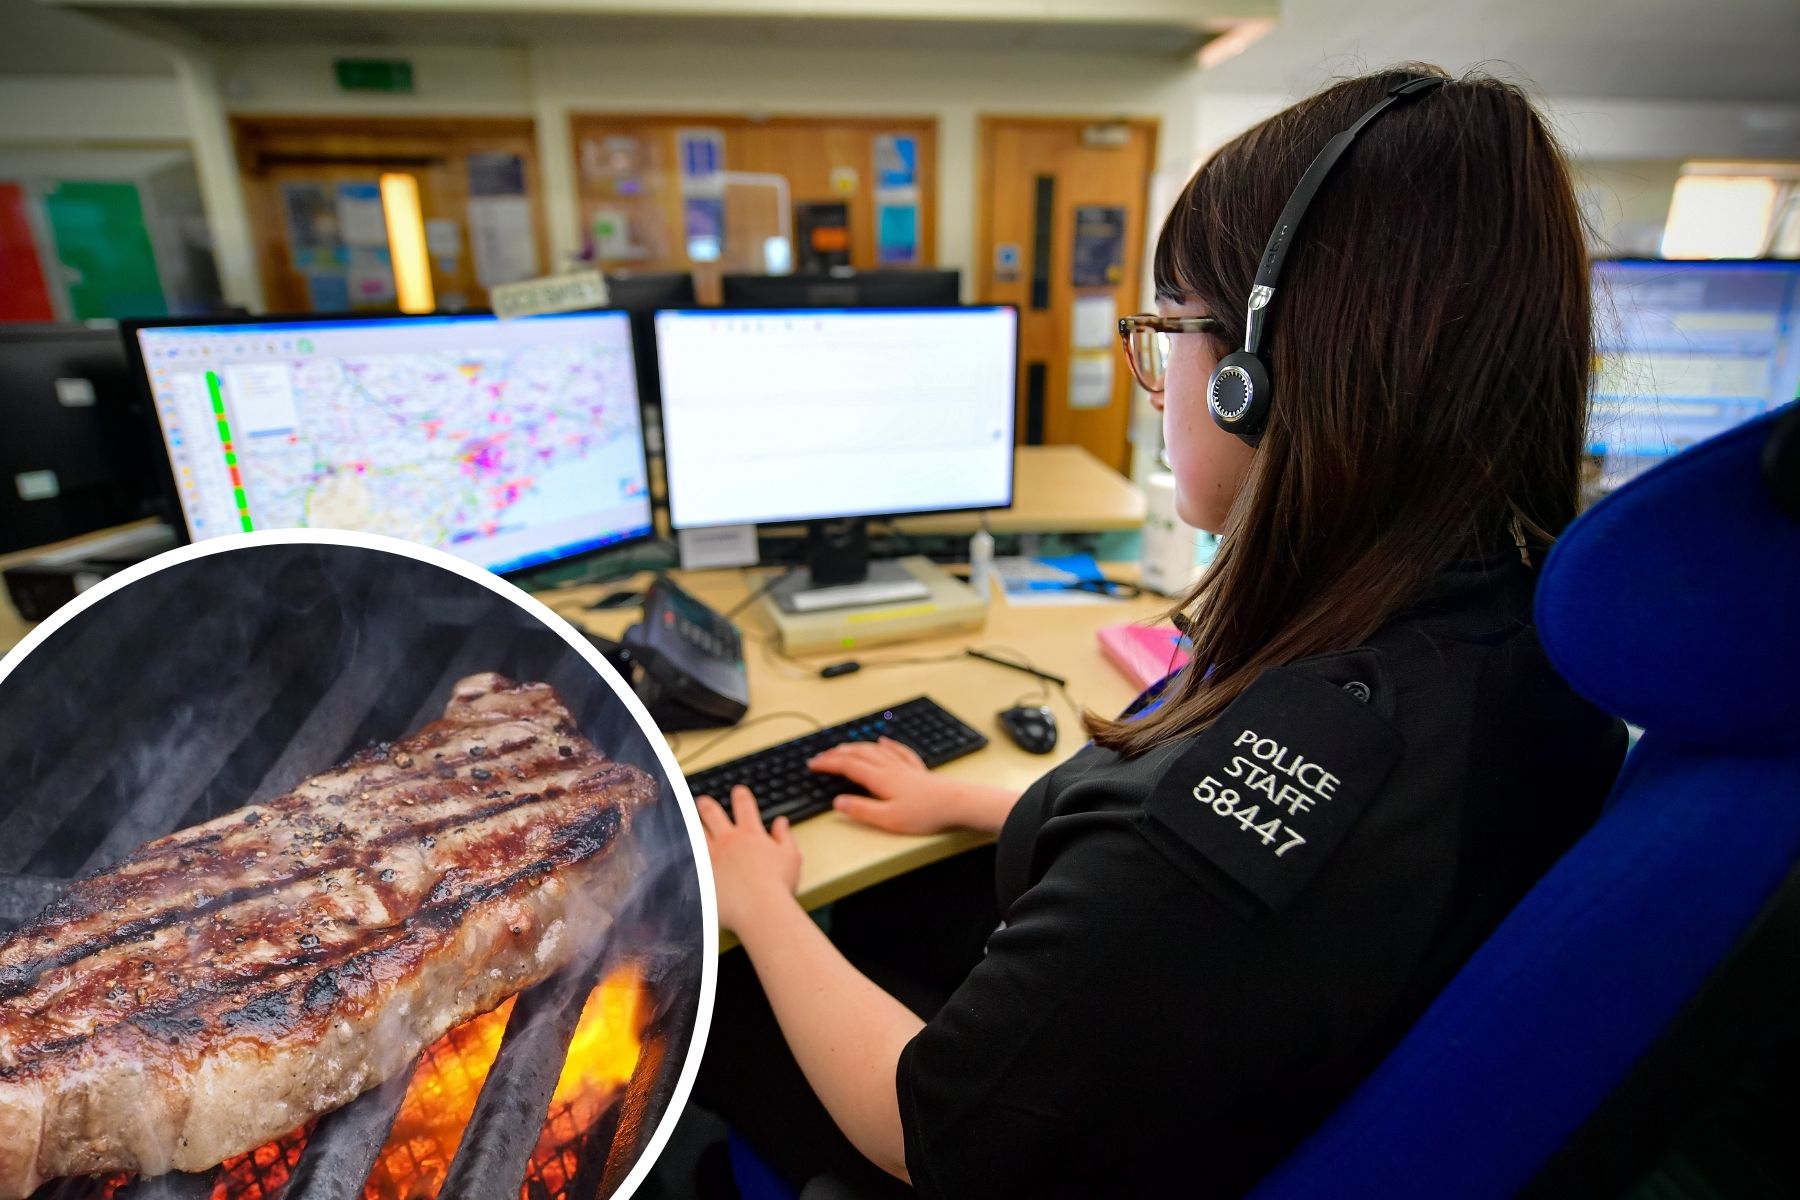 Essex Police reveals ridiculous hoax calls made to 999